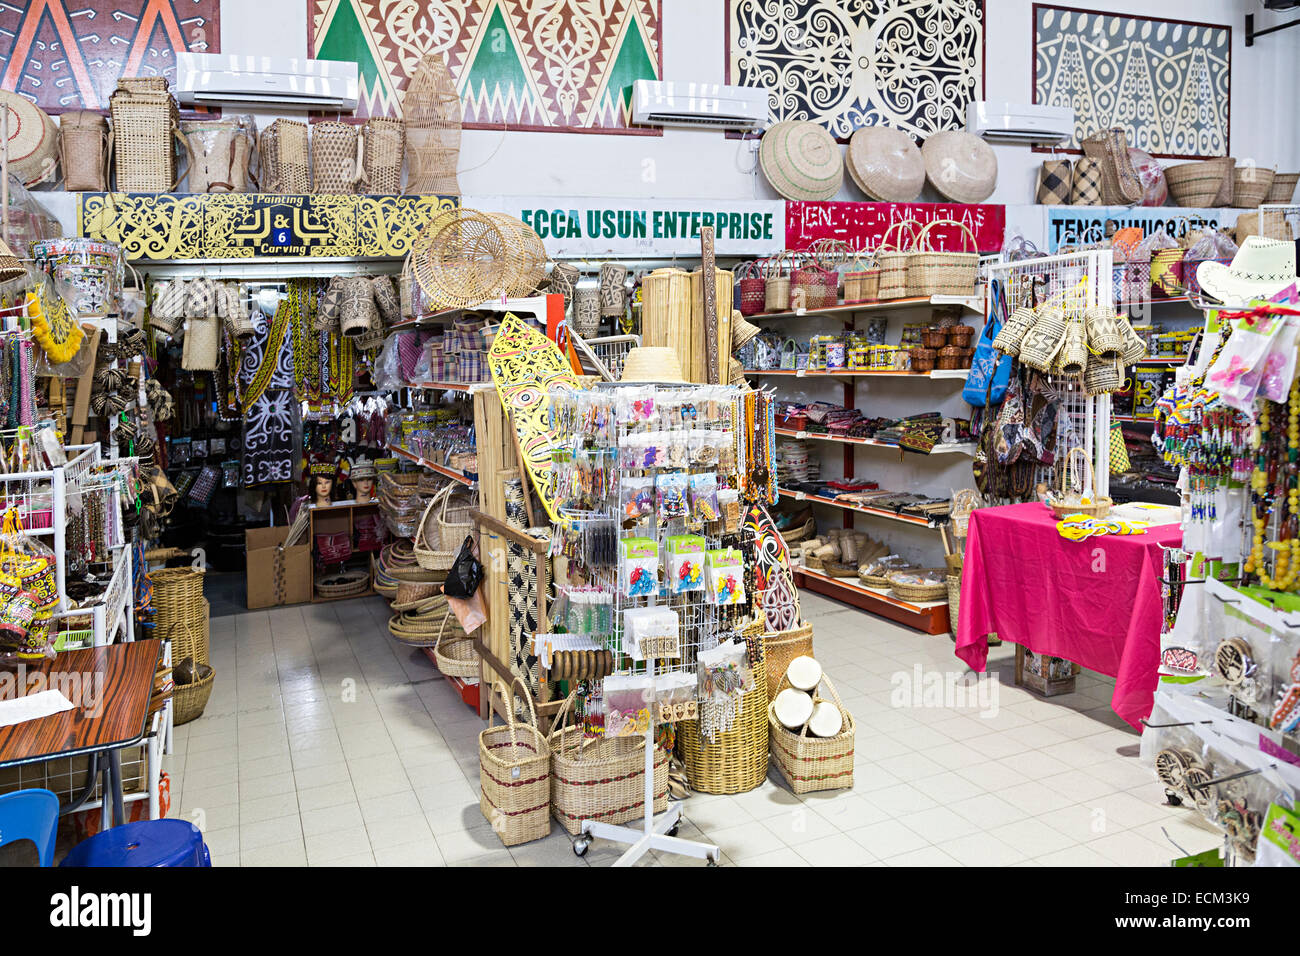 Local artisan goods on sale in indoor market emporium, Miri, Malaysia Stock Photo